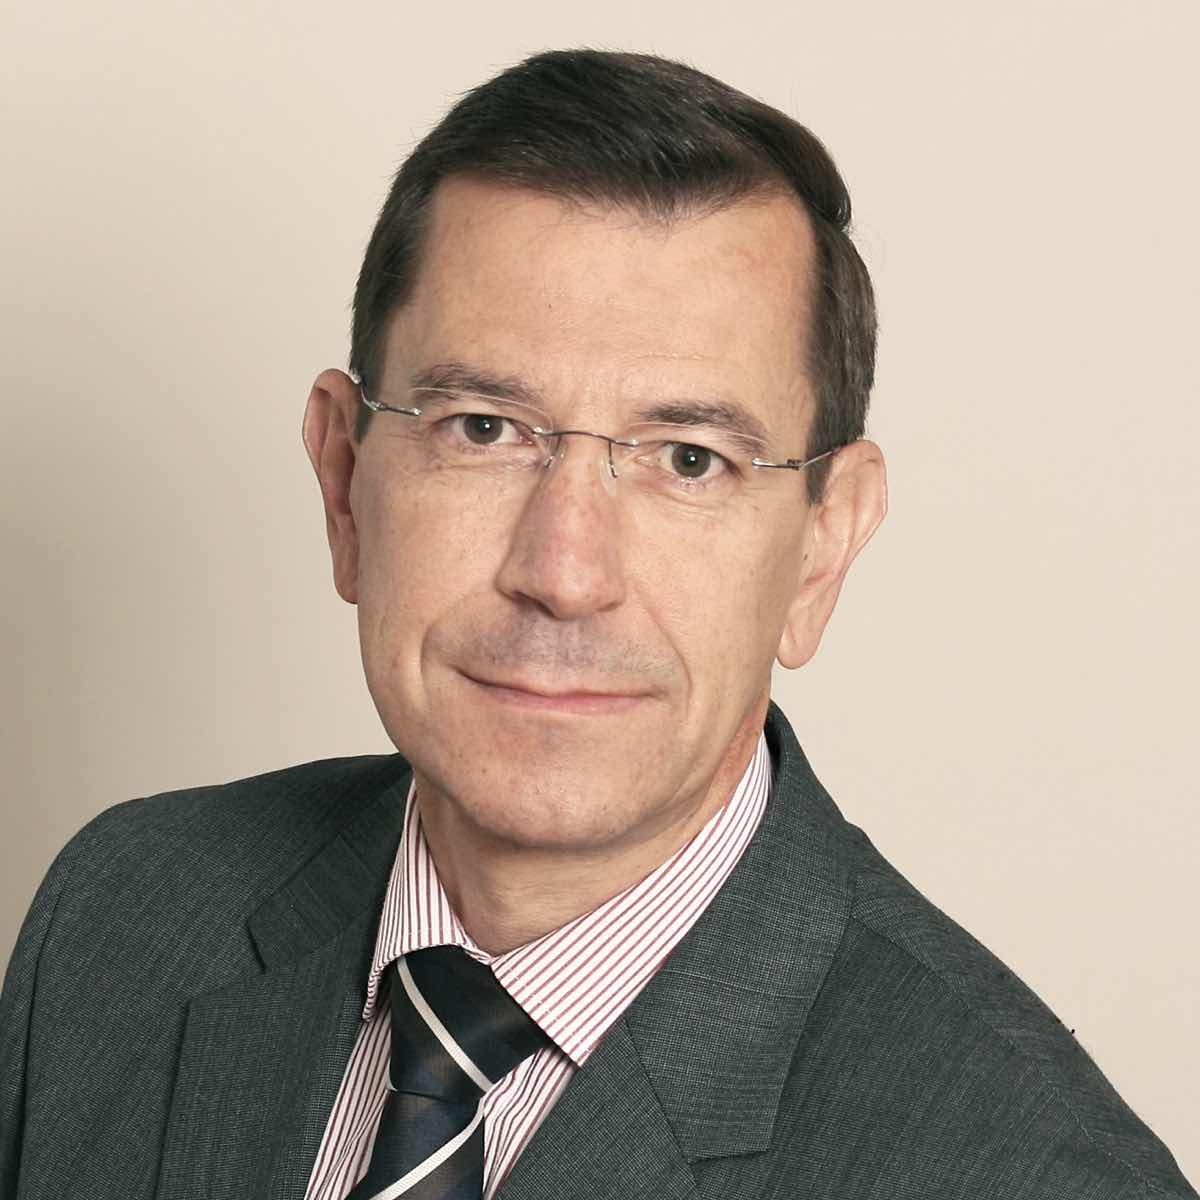 Mondi appoints Thomas Gröner as its new head of innovation